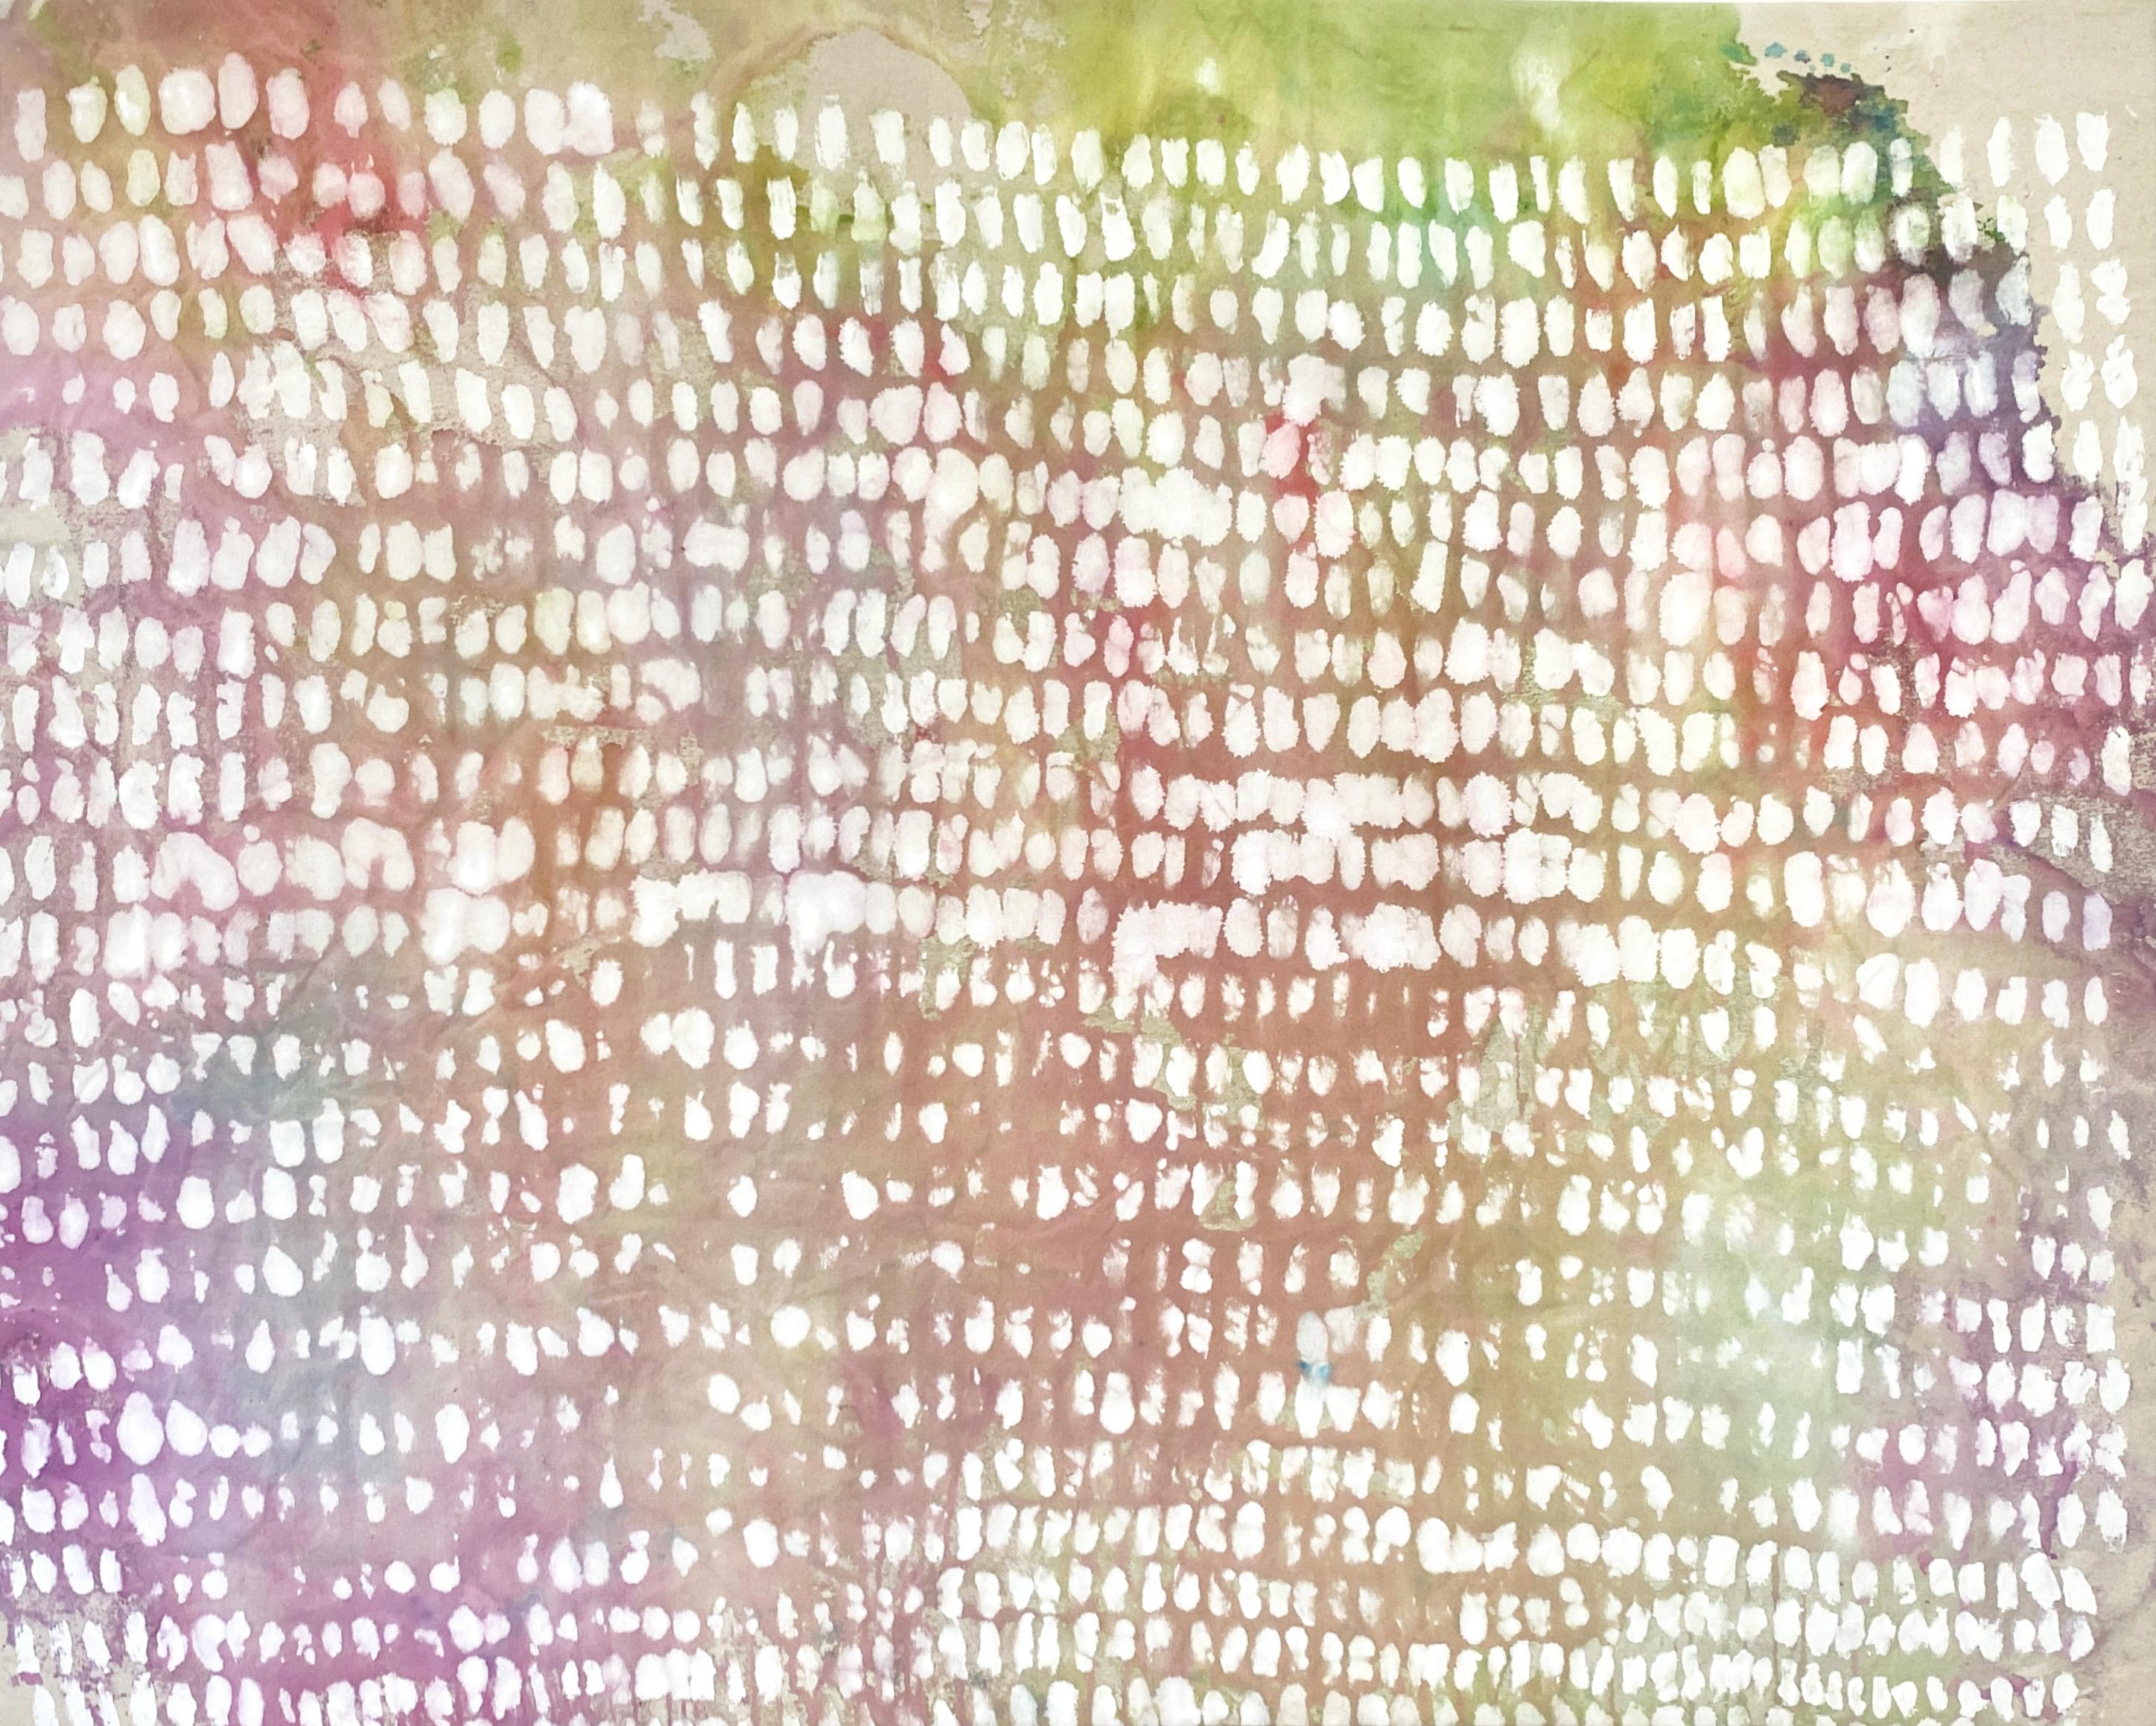 Ephemeral vignette #03 – farbenfrohes abstraktes Flechtgemälde, Acryl auf roher Leinwand